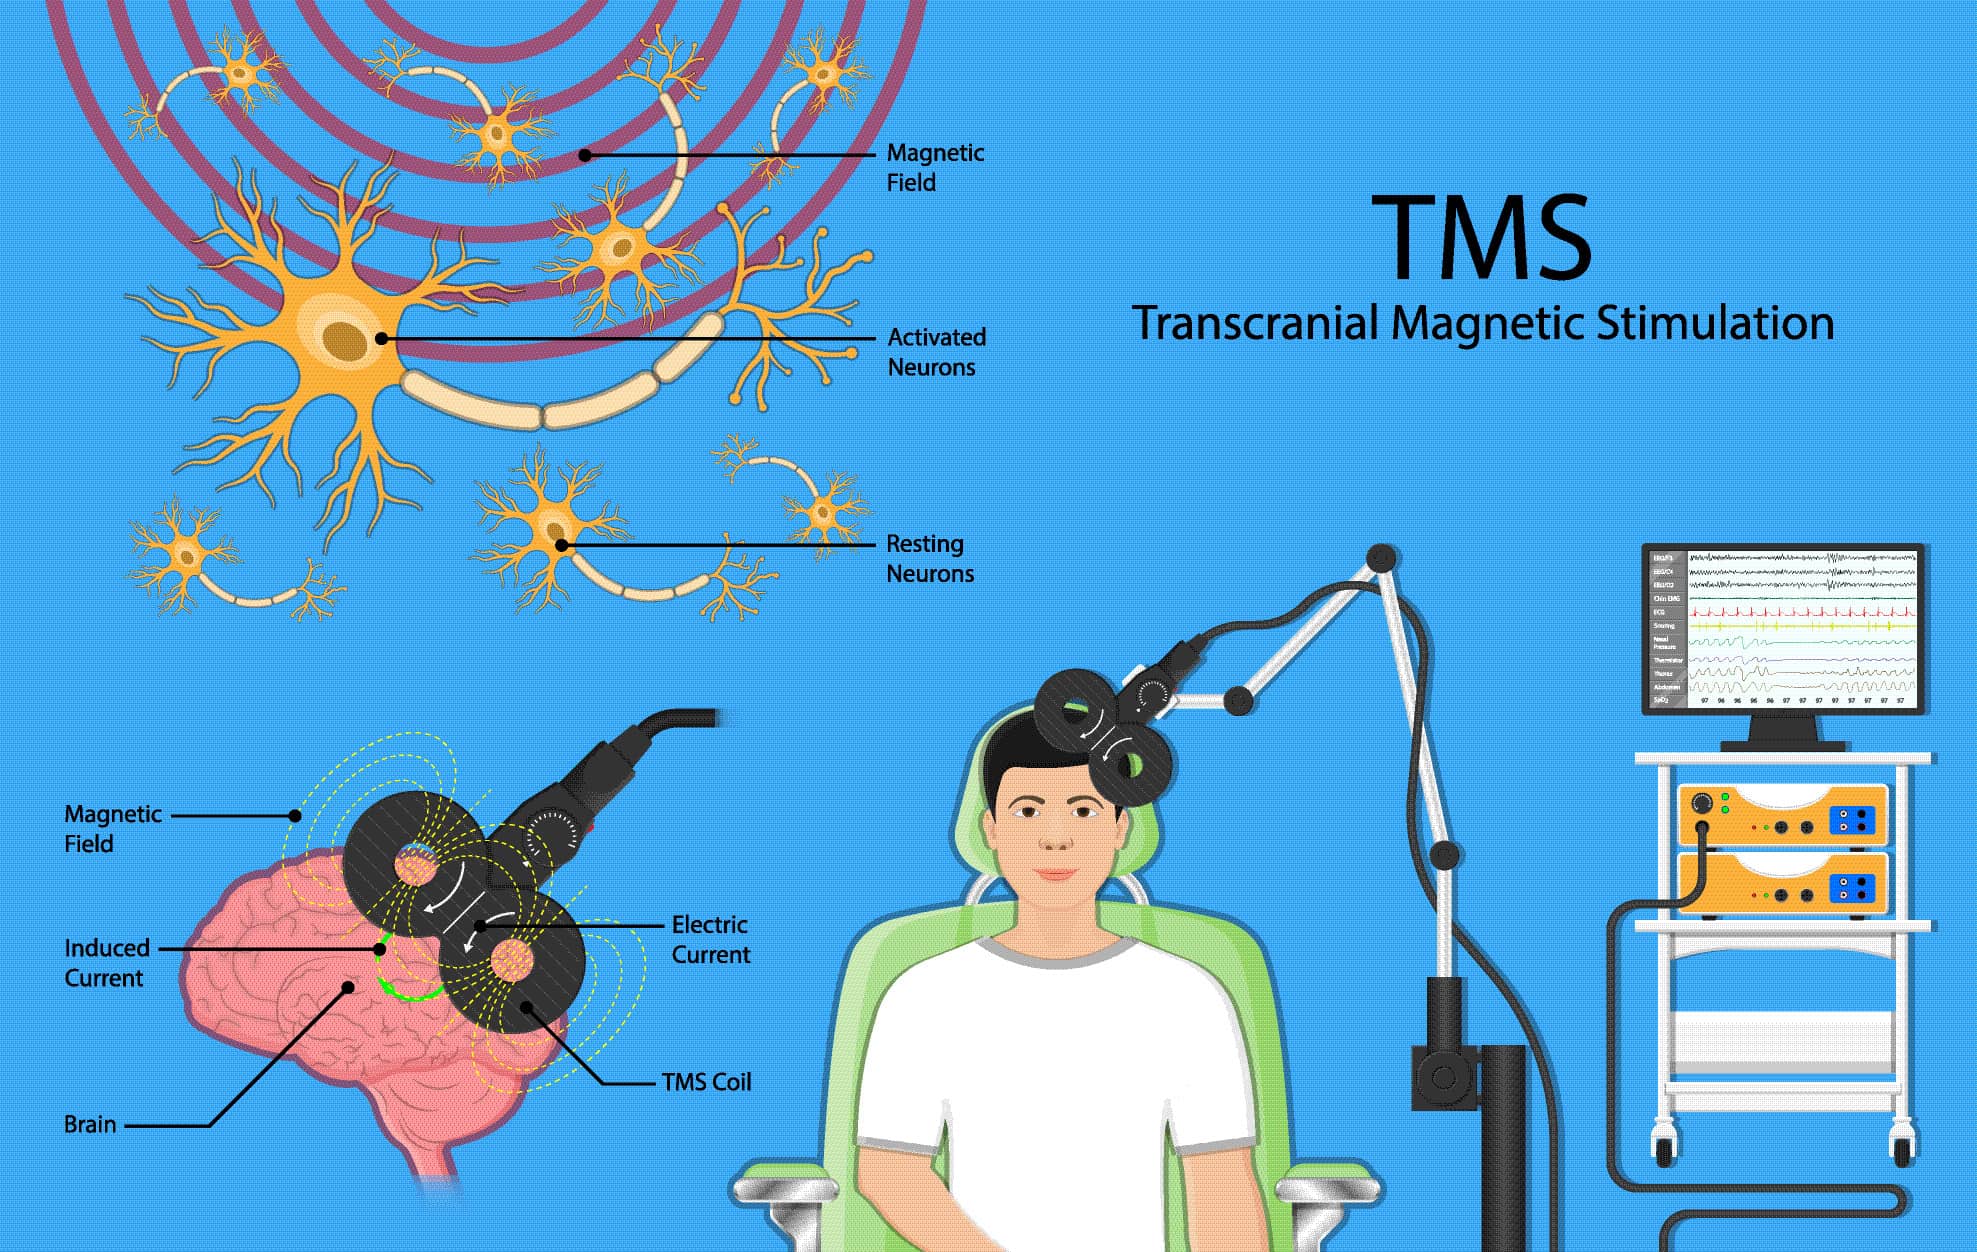 Transcranial magnetic stimulation